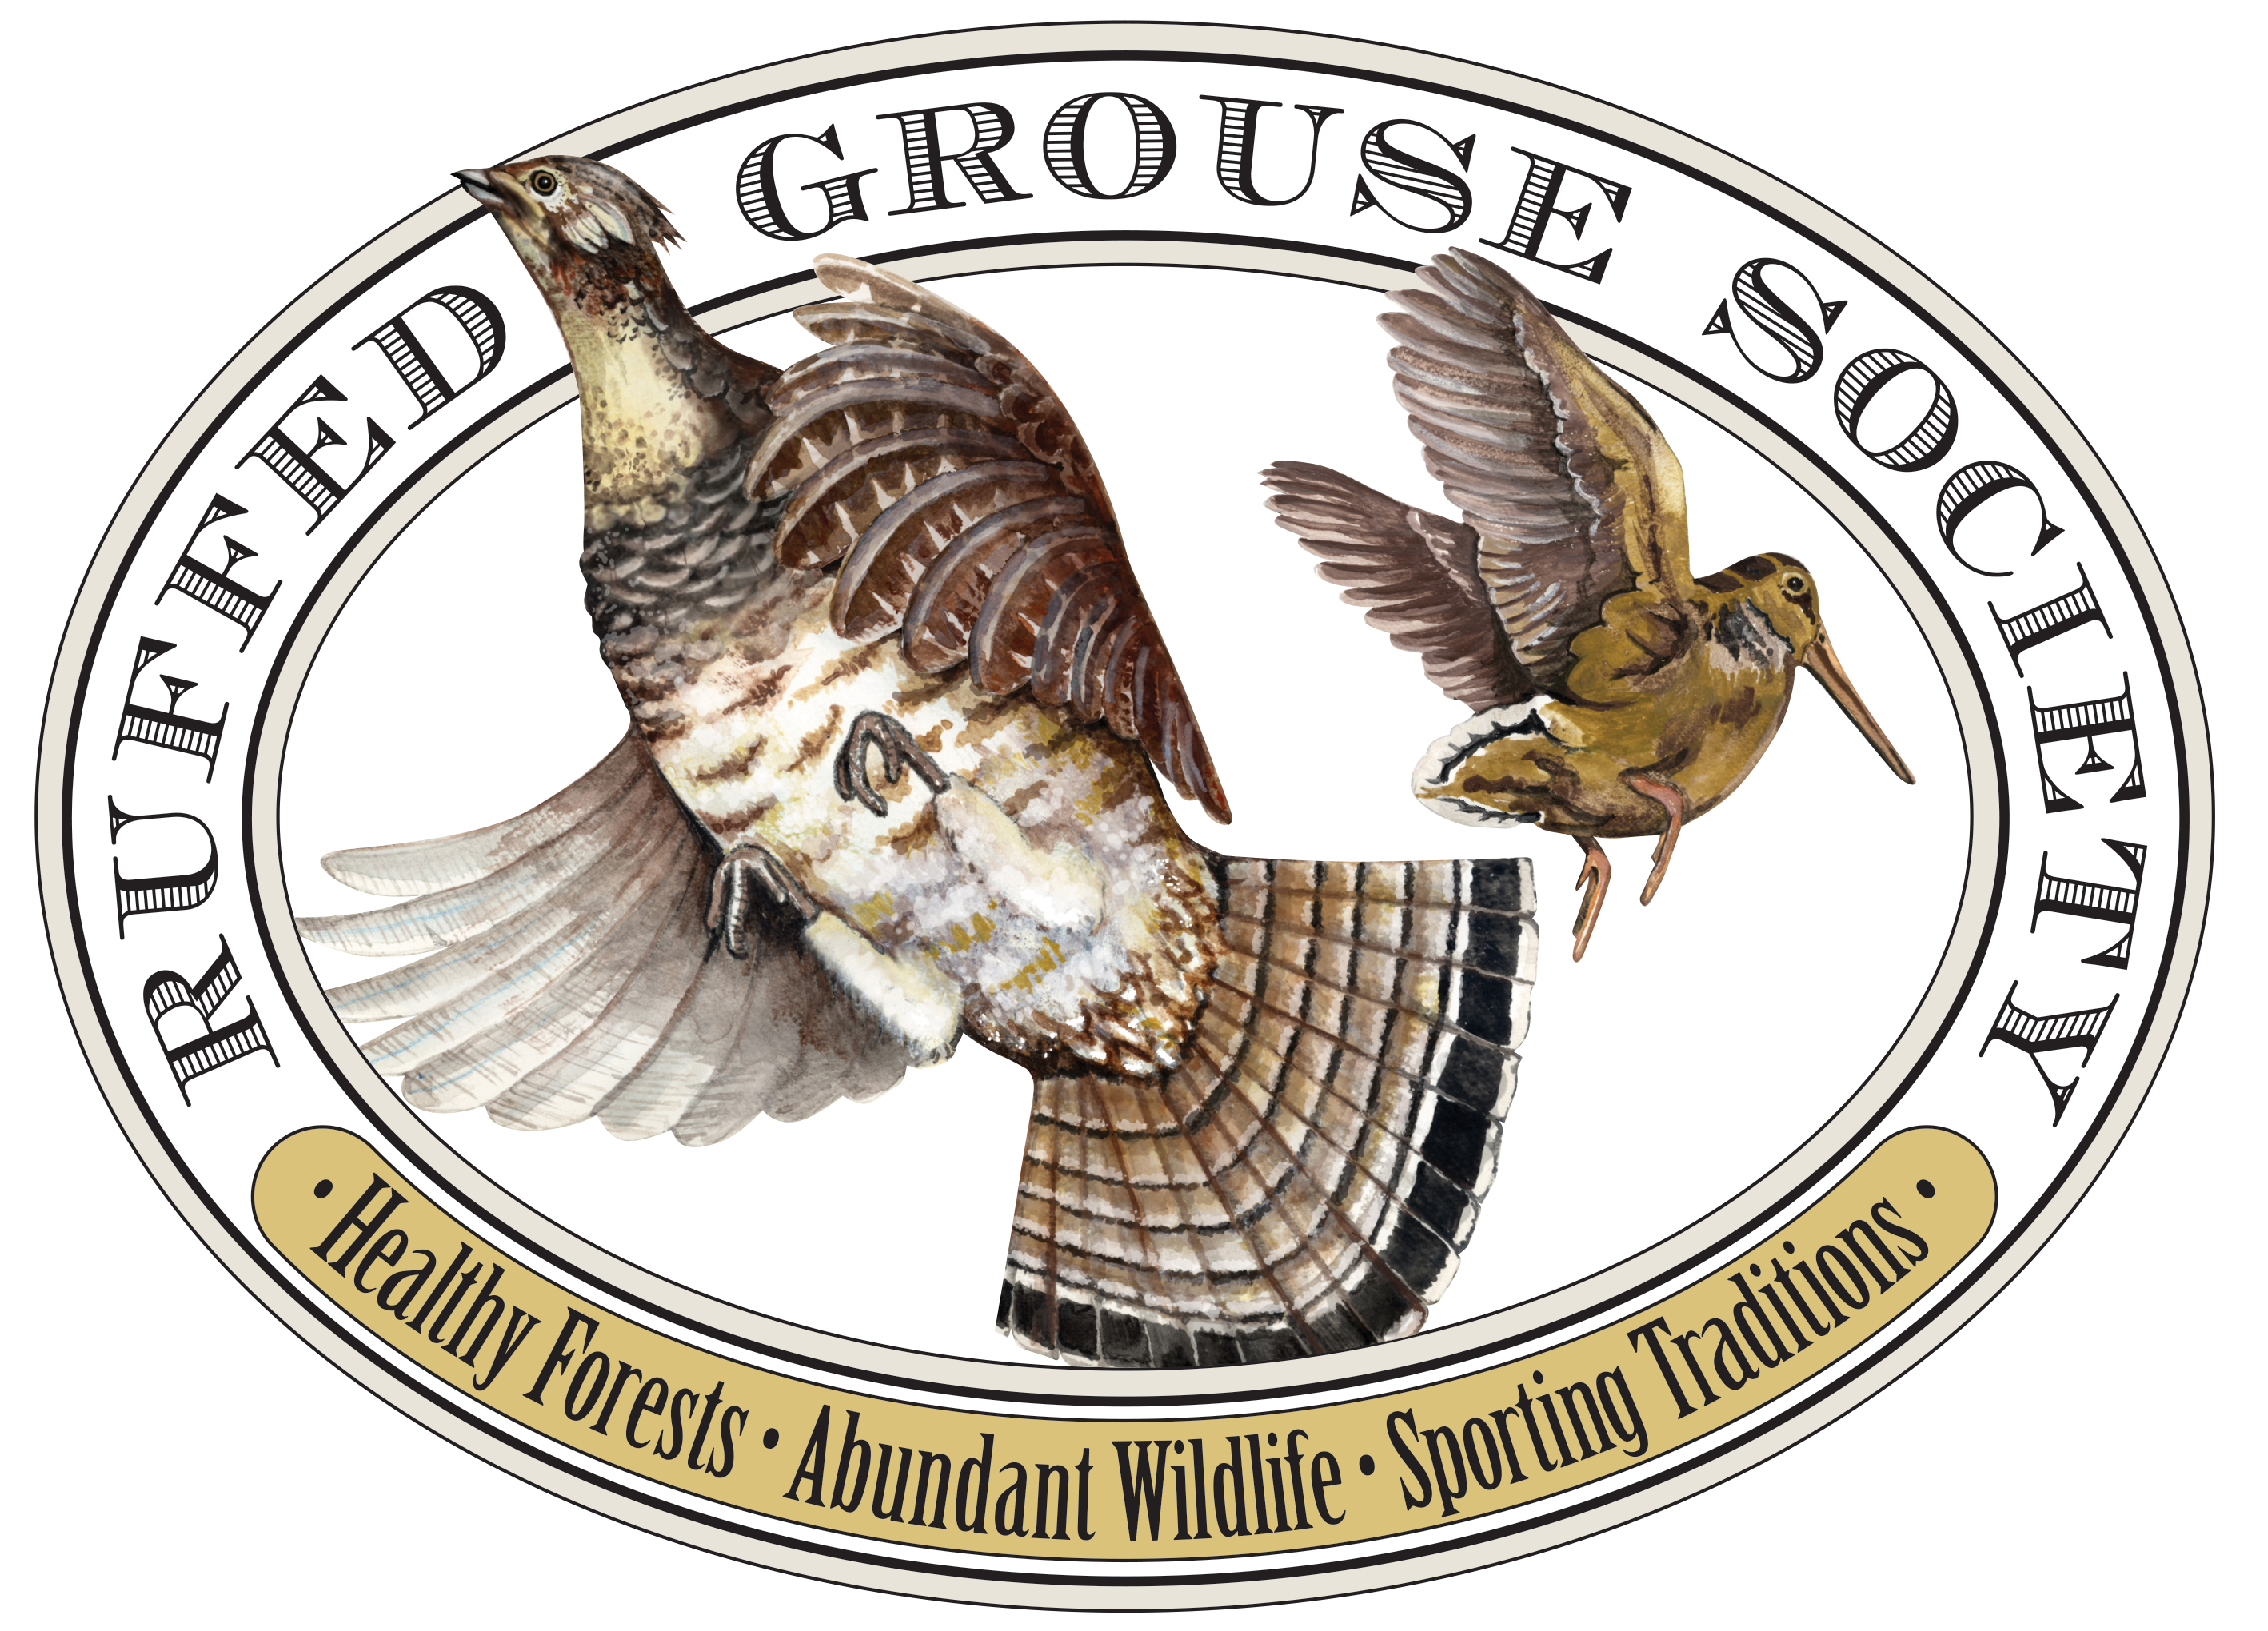 Ruffed Grouse Society logo